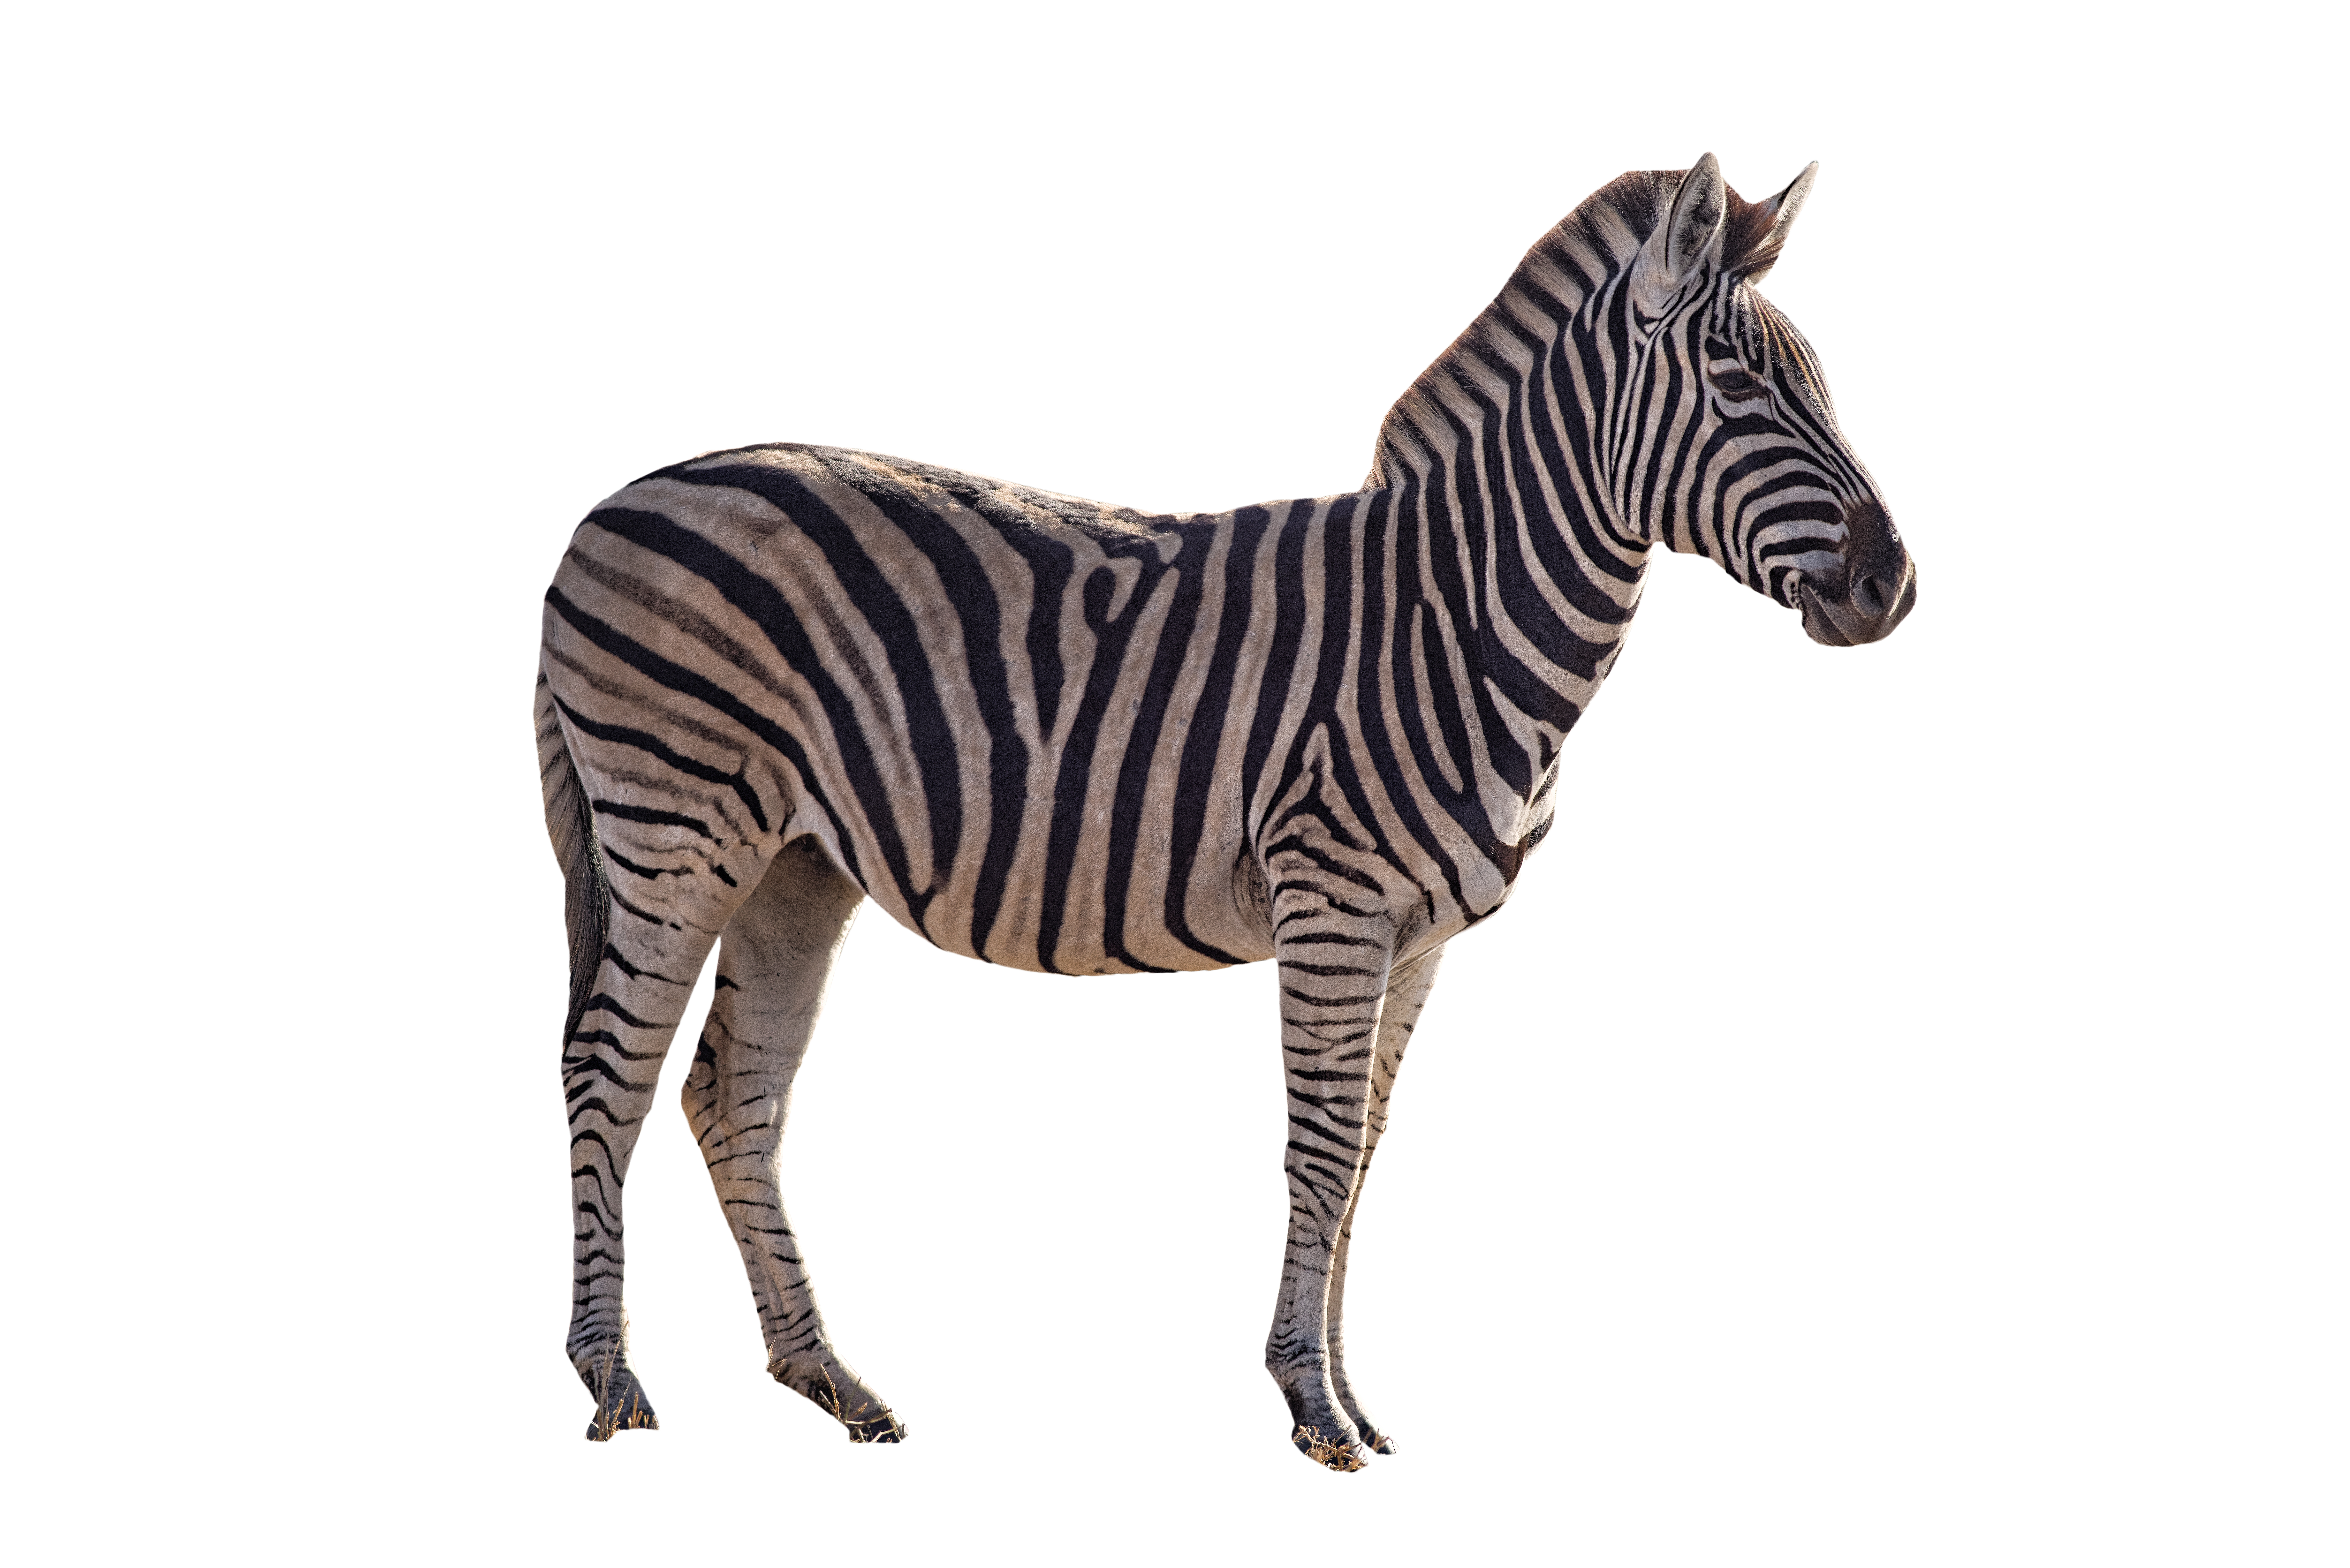 clipart zebra transparent background